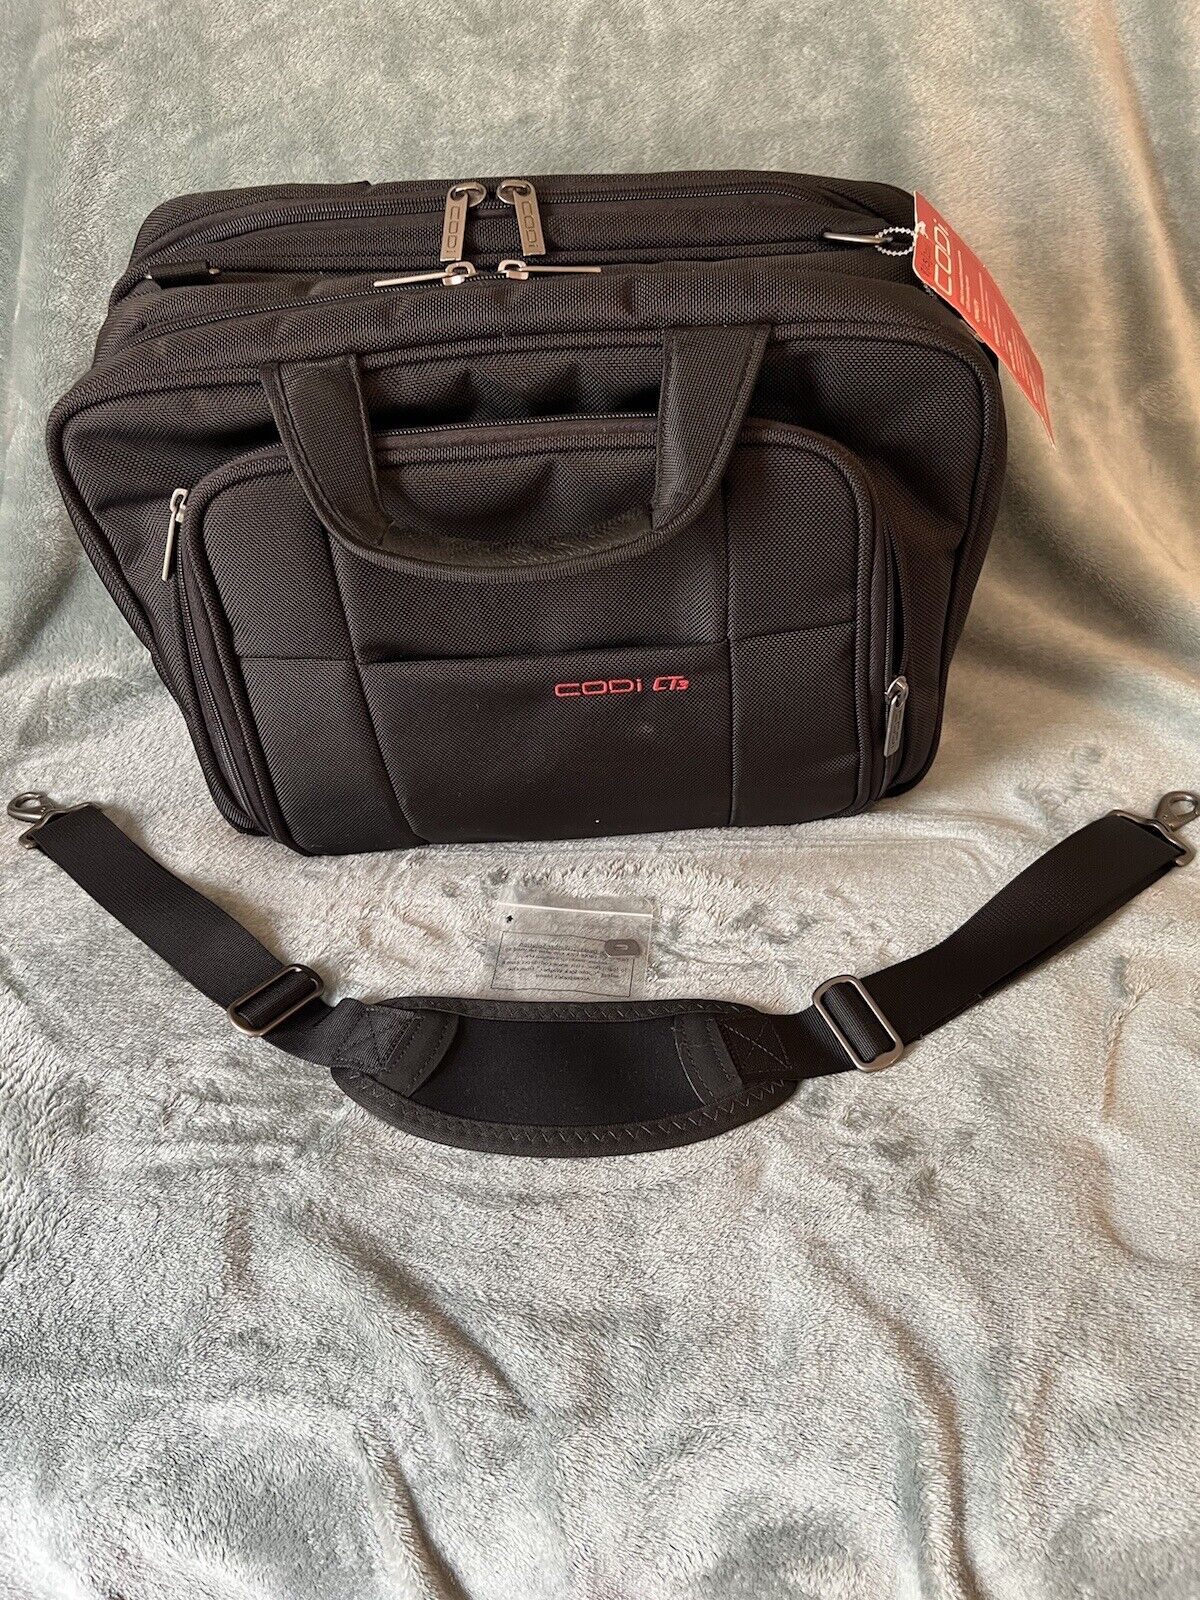 CODI Laptop Briefcase Large Black Expandable Organizer CT3 Zipper Pockets Strap